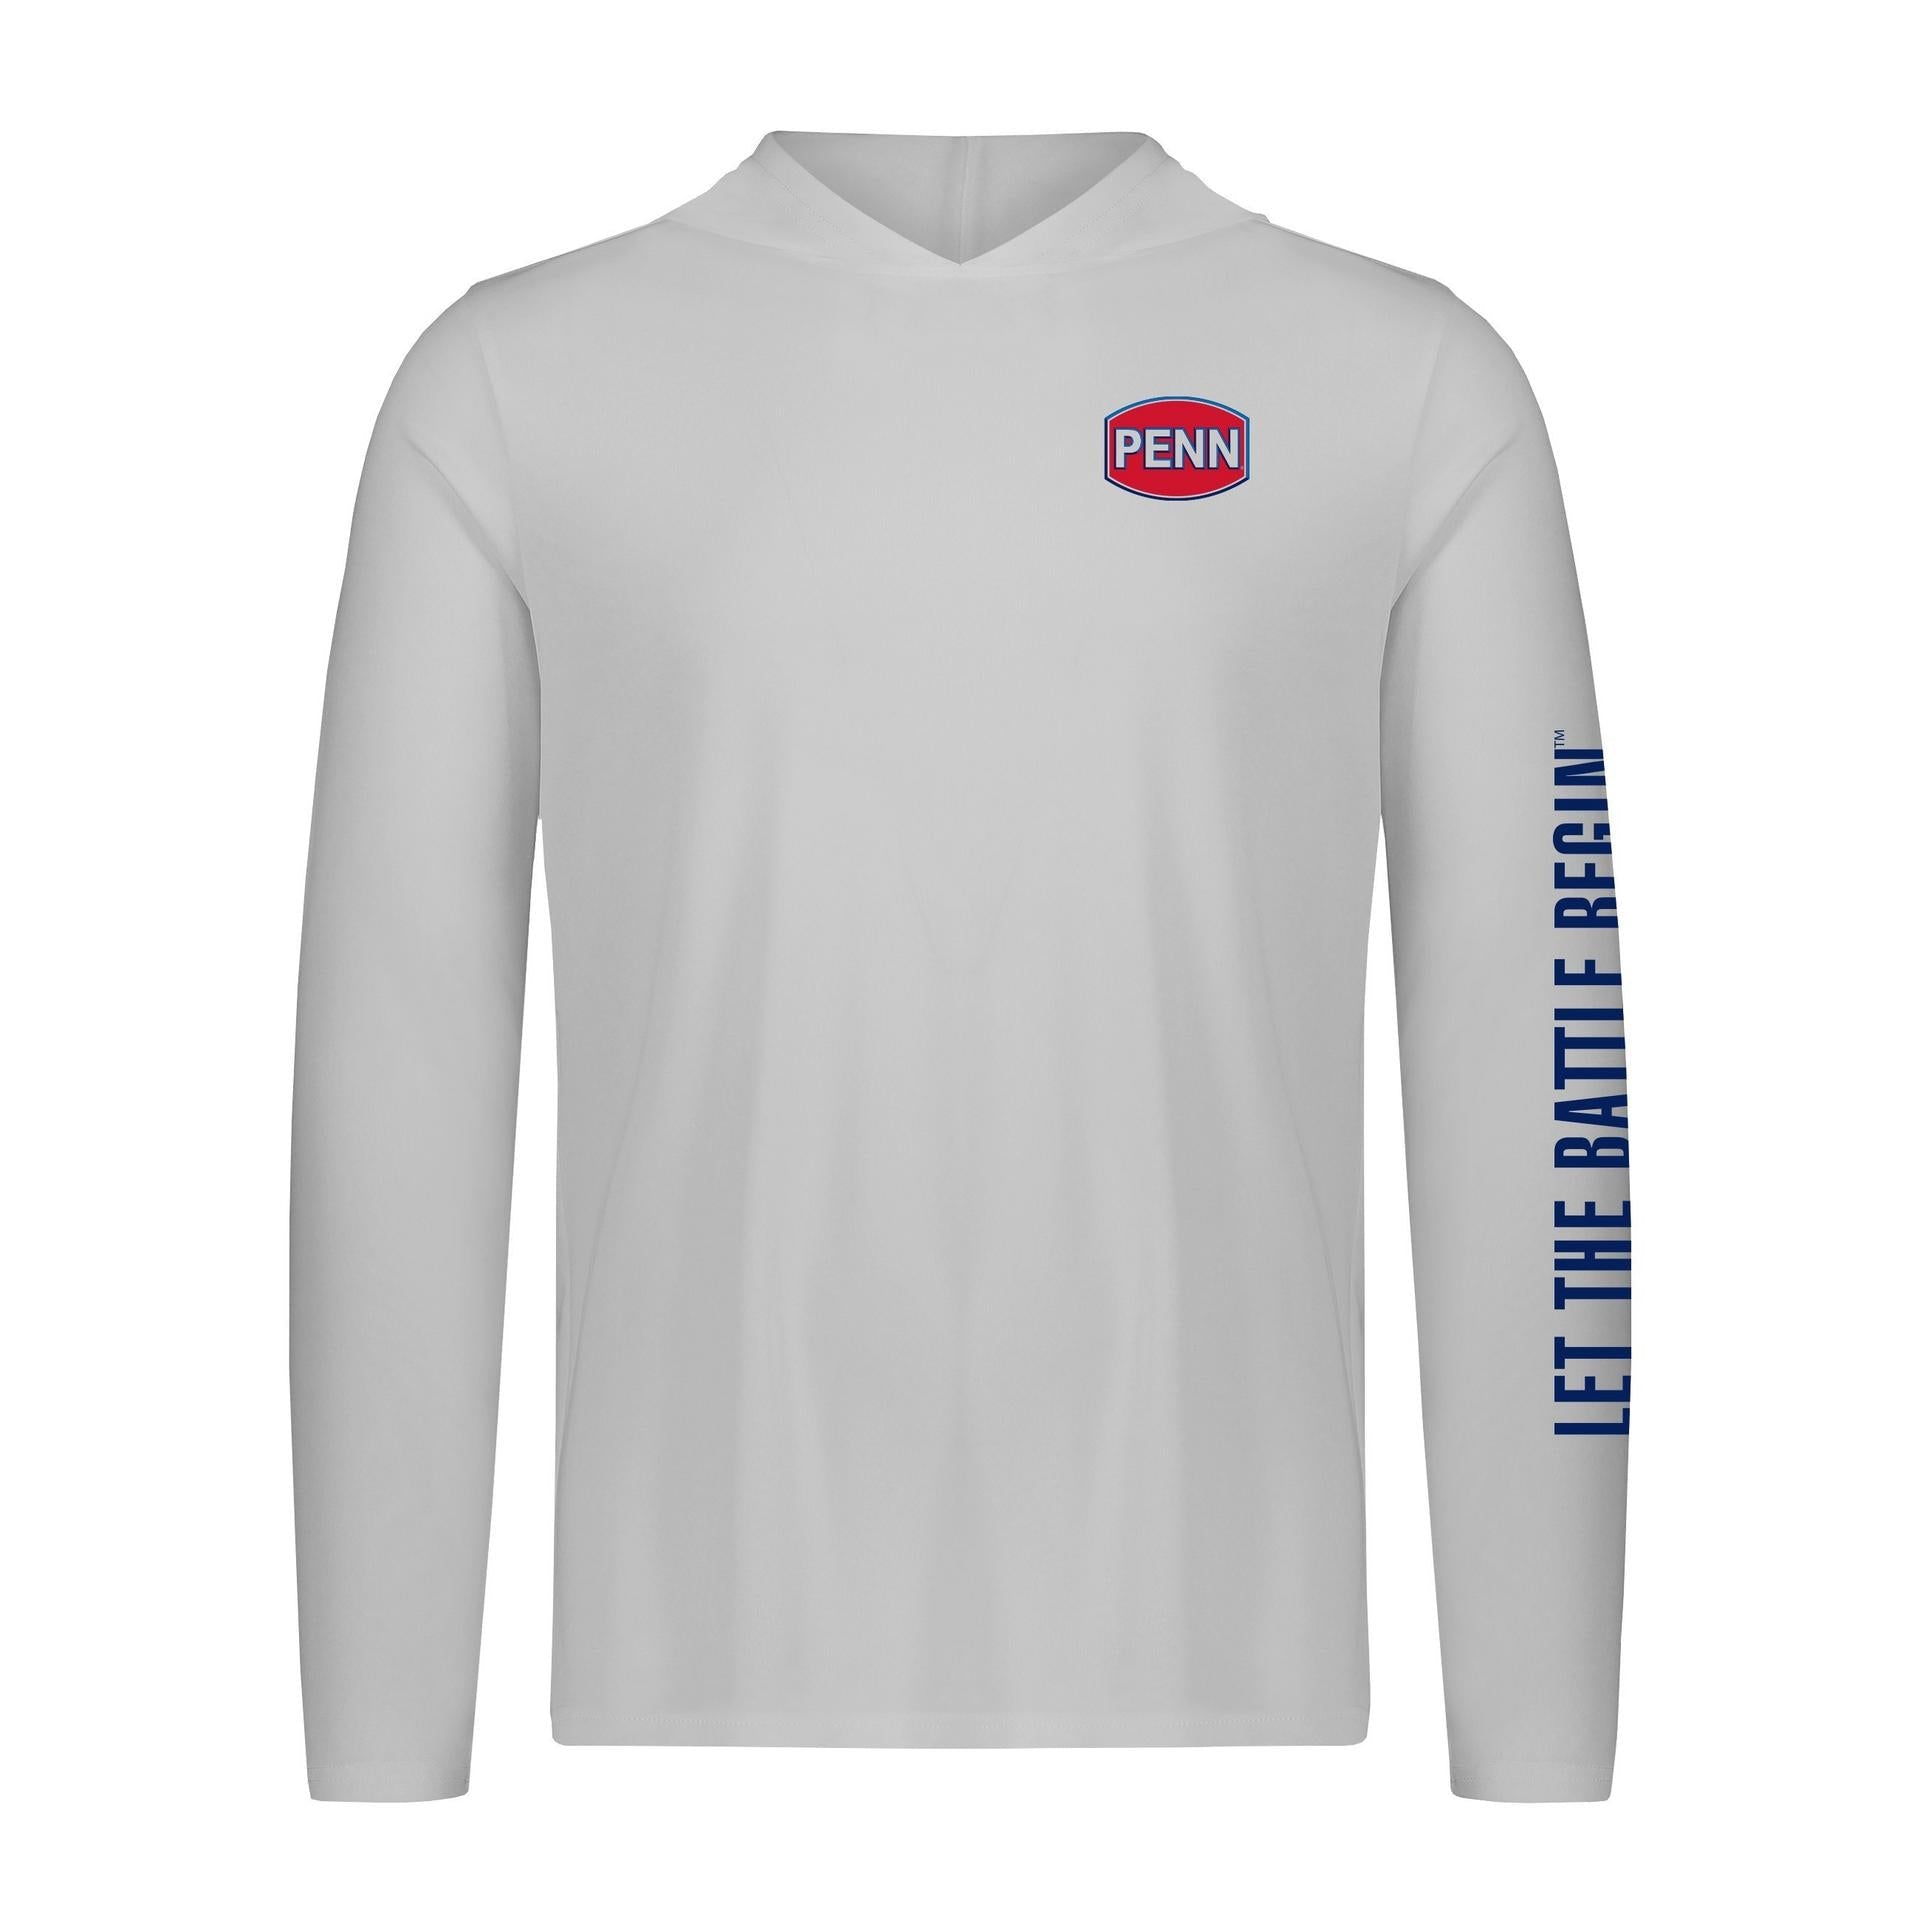 New PENN Fishing saltwater reels rods men's logo T-shirt USA Size S-5XL